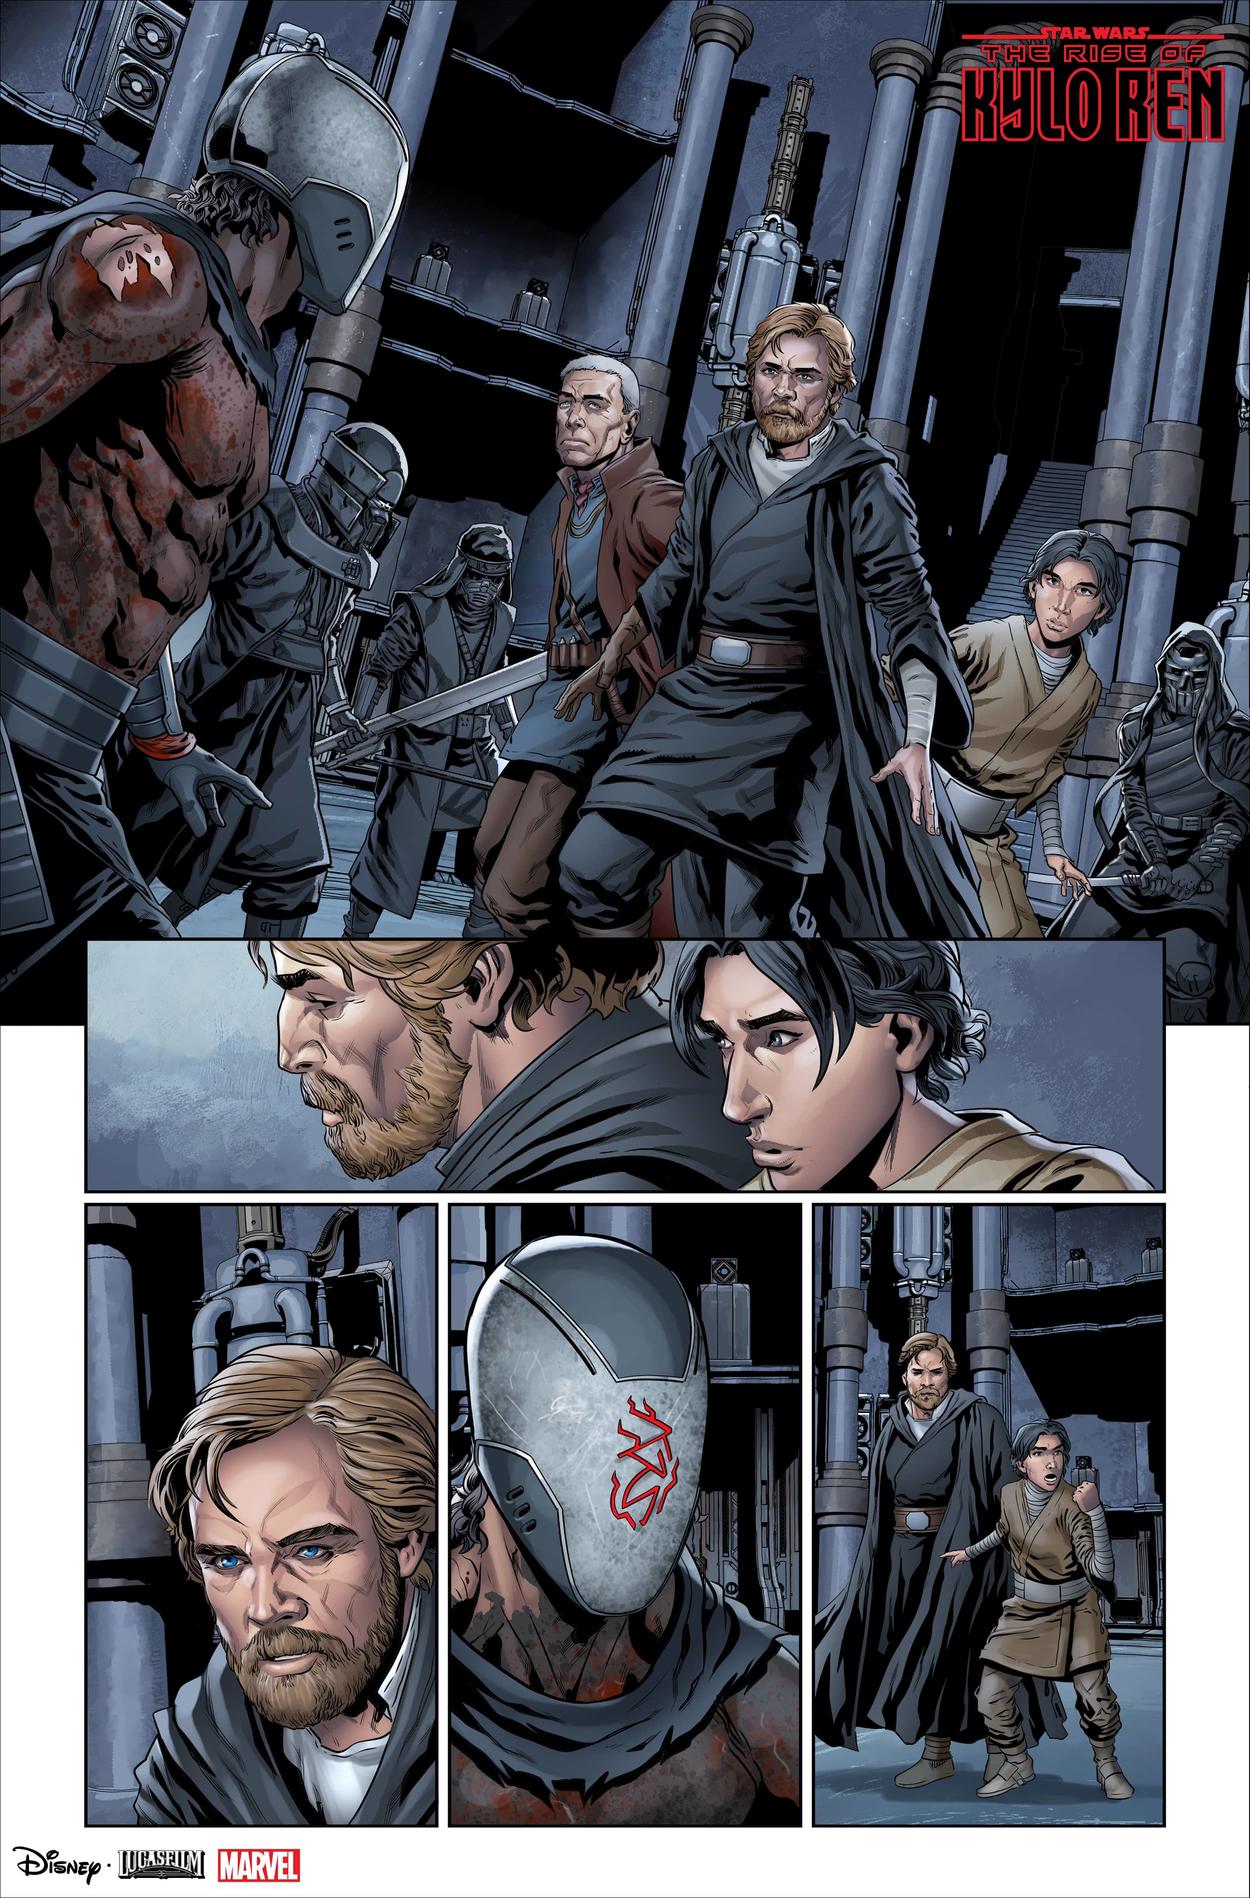 Luke Skywalker and Ben Solo face the Knights of Ren